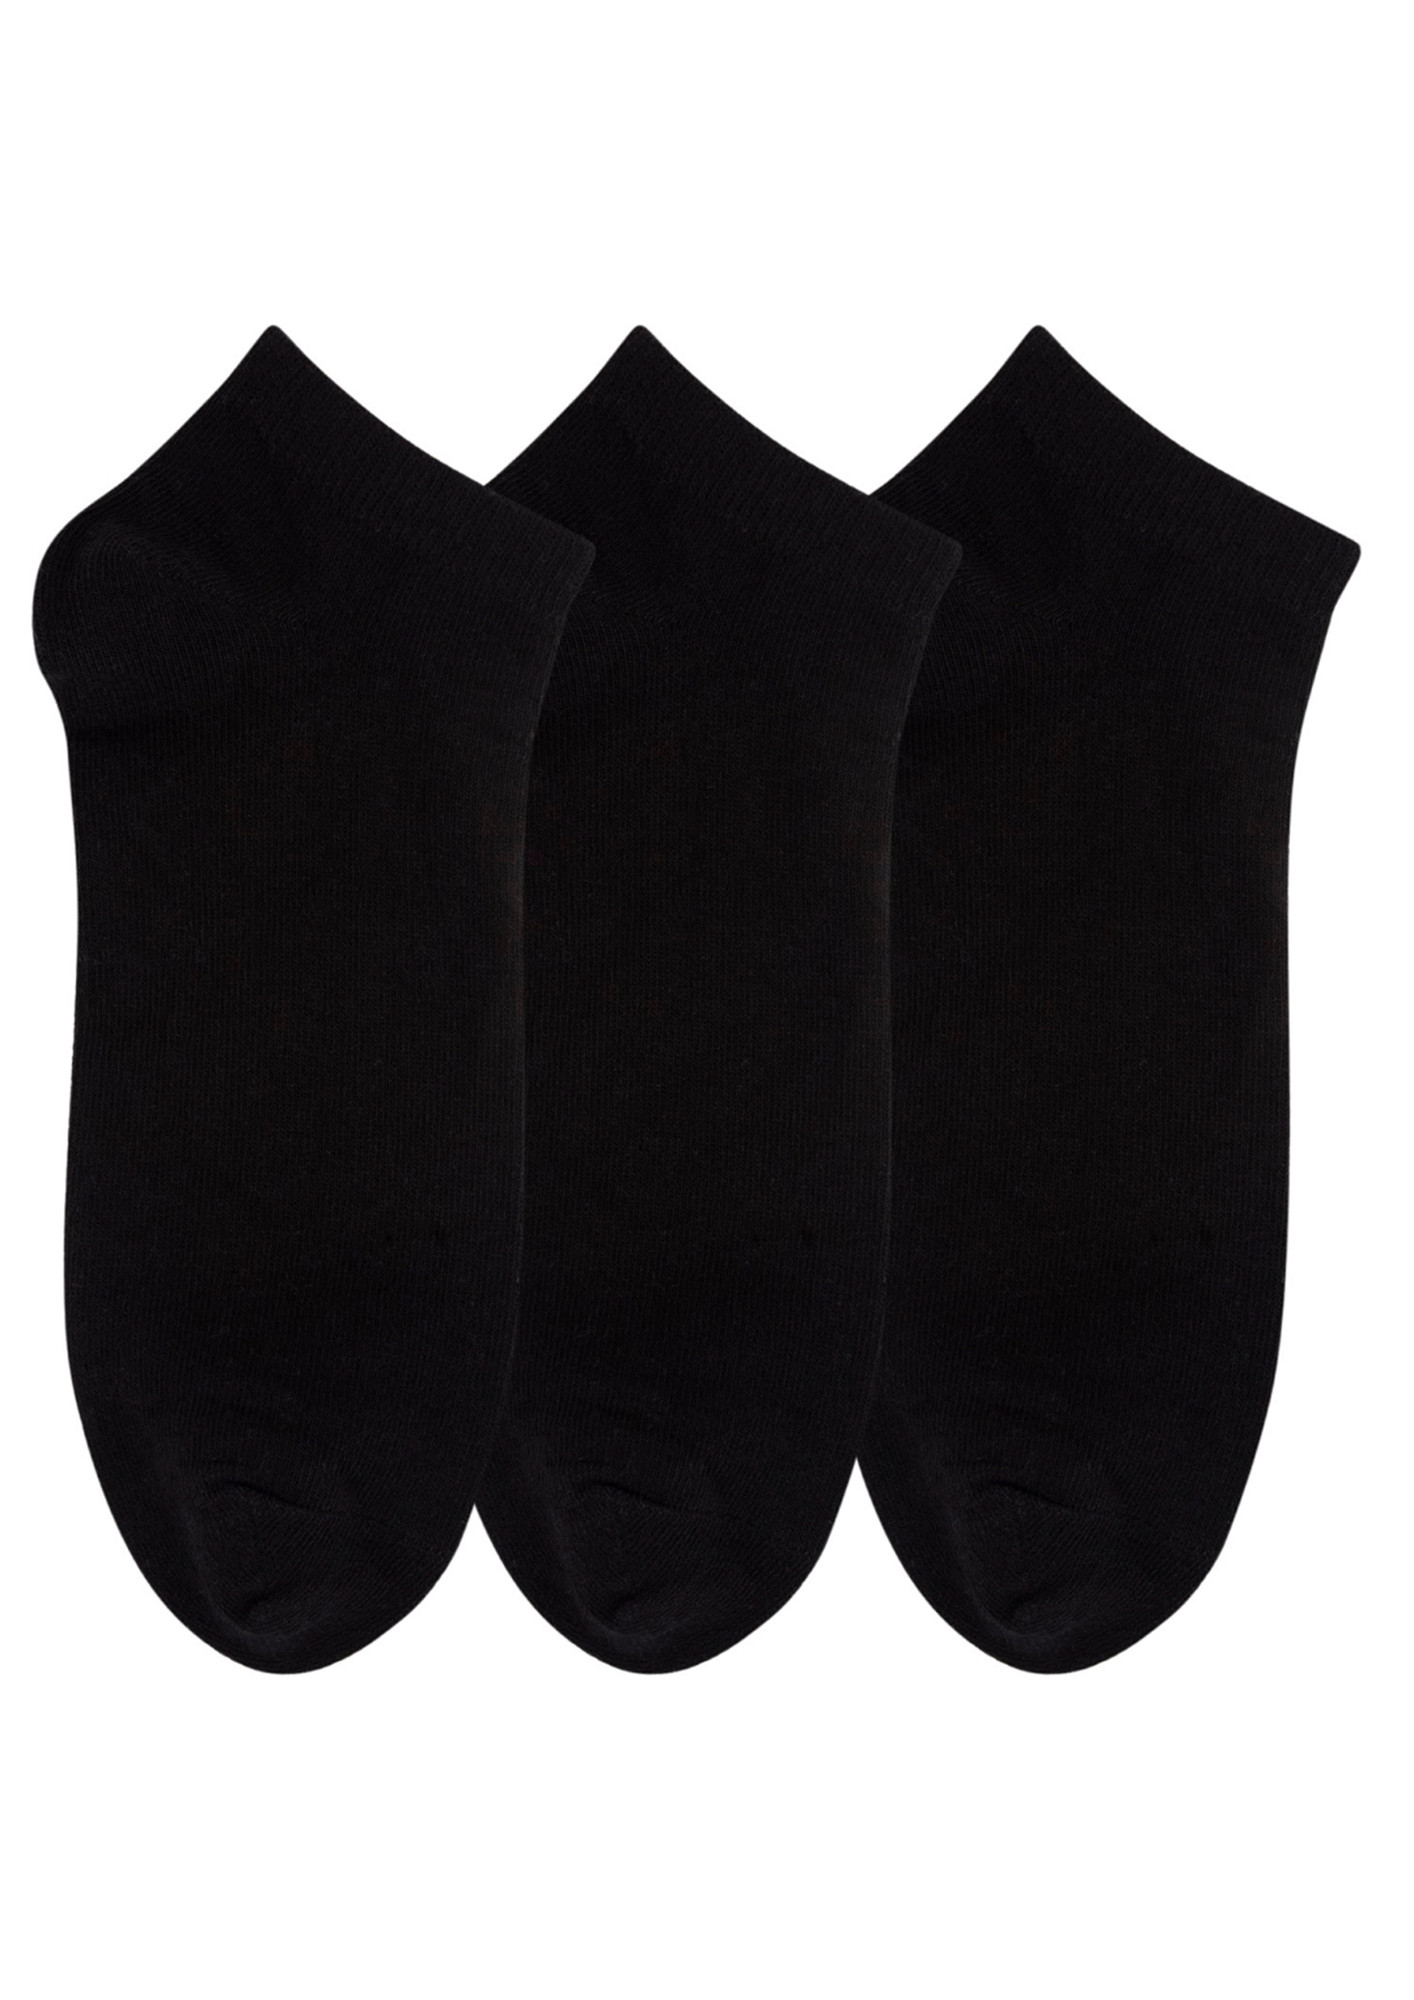 N2S NEXT2SKIN Women's Low Ankle Length Cotton Socks-Pack of 3 (Black:Black:Black)